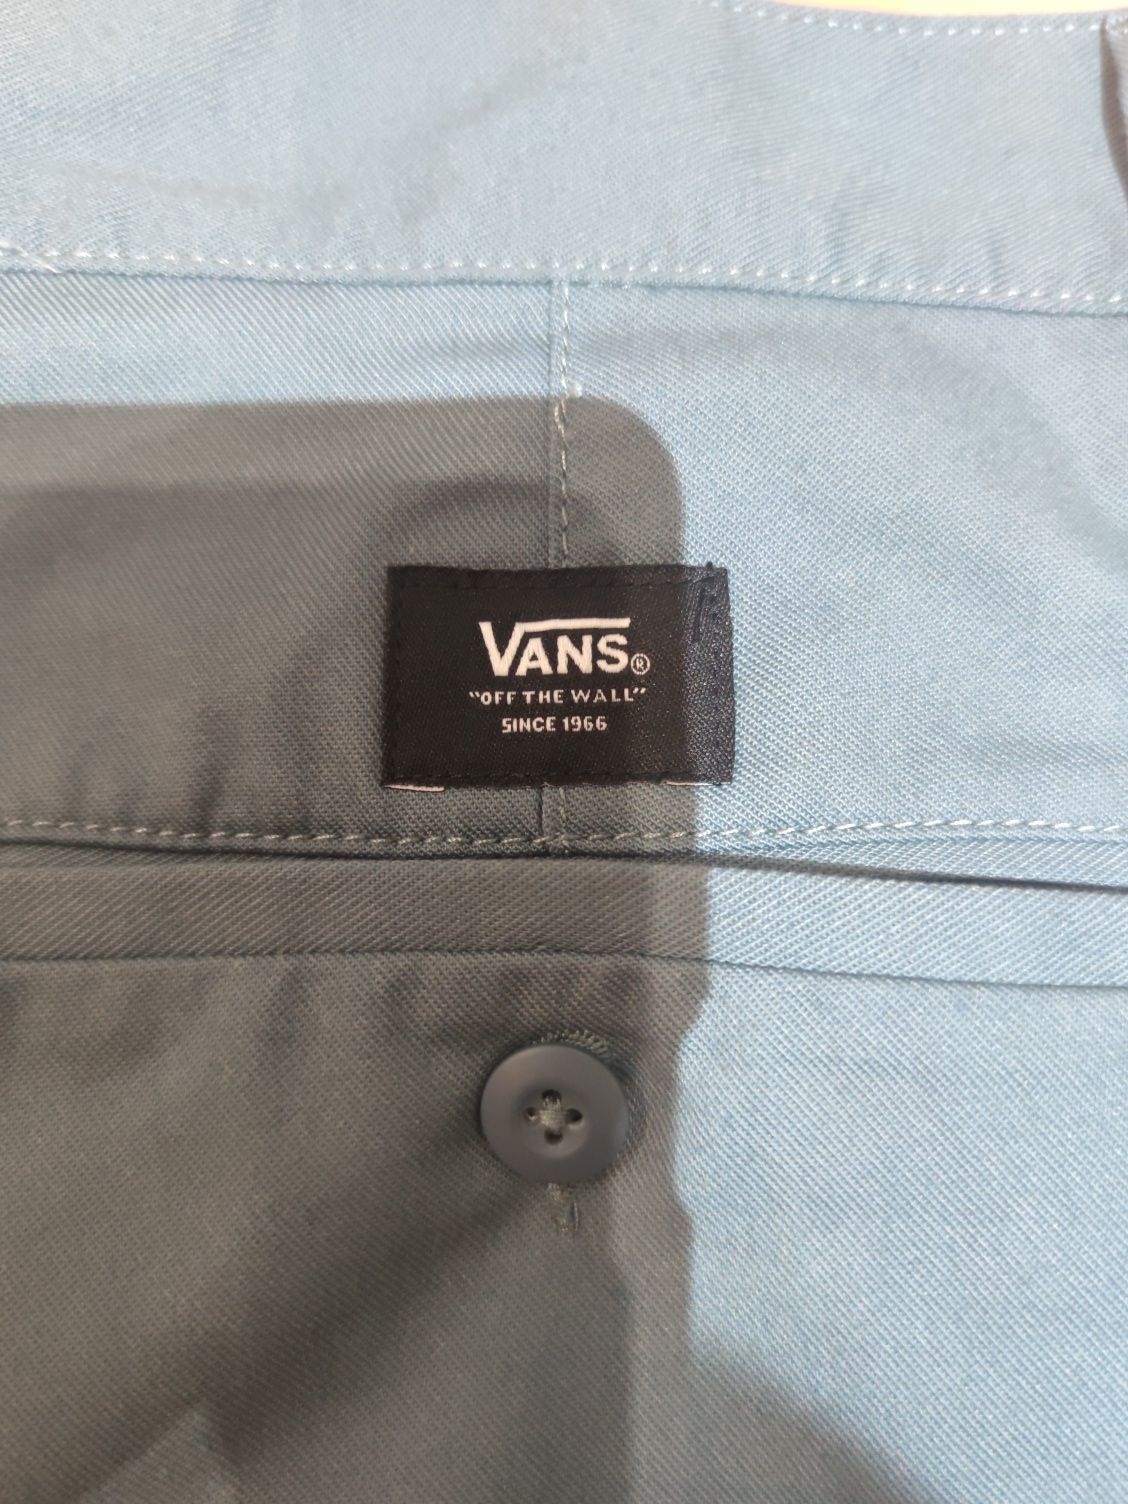 Spodnie męskie firmy Vans